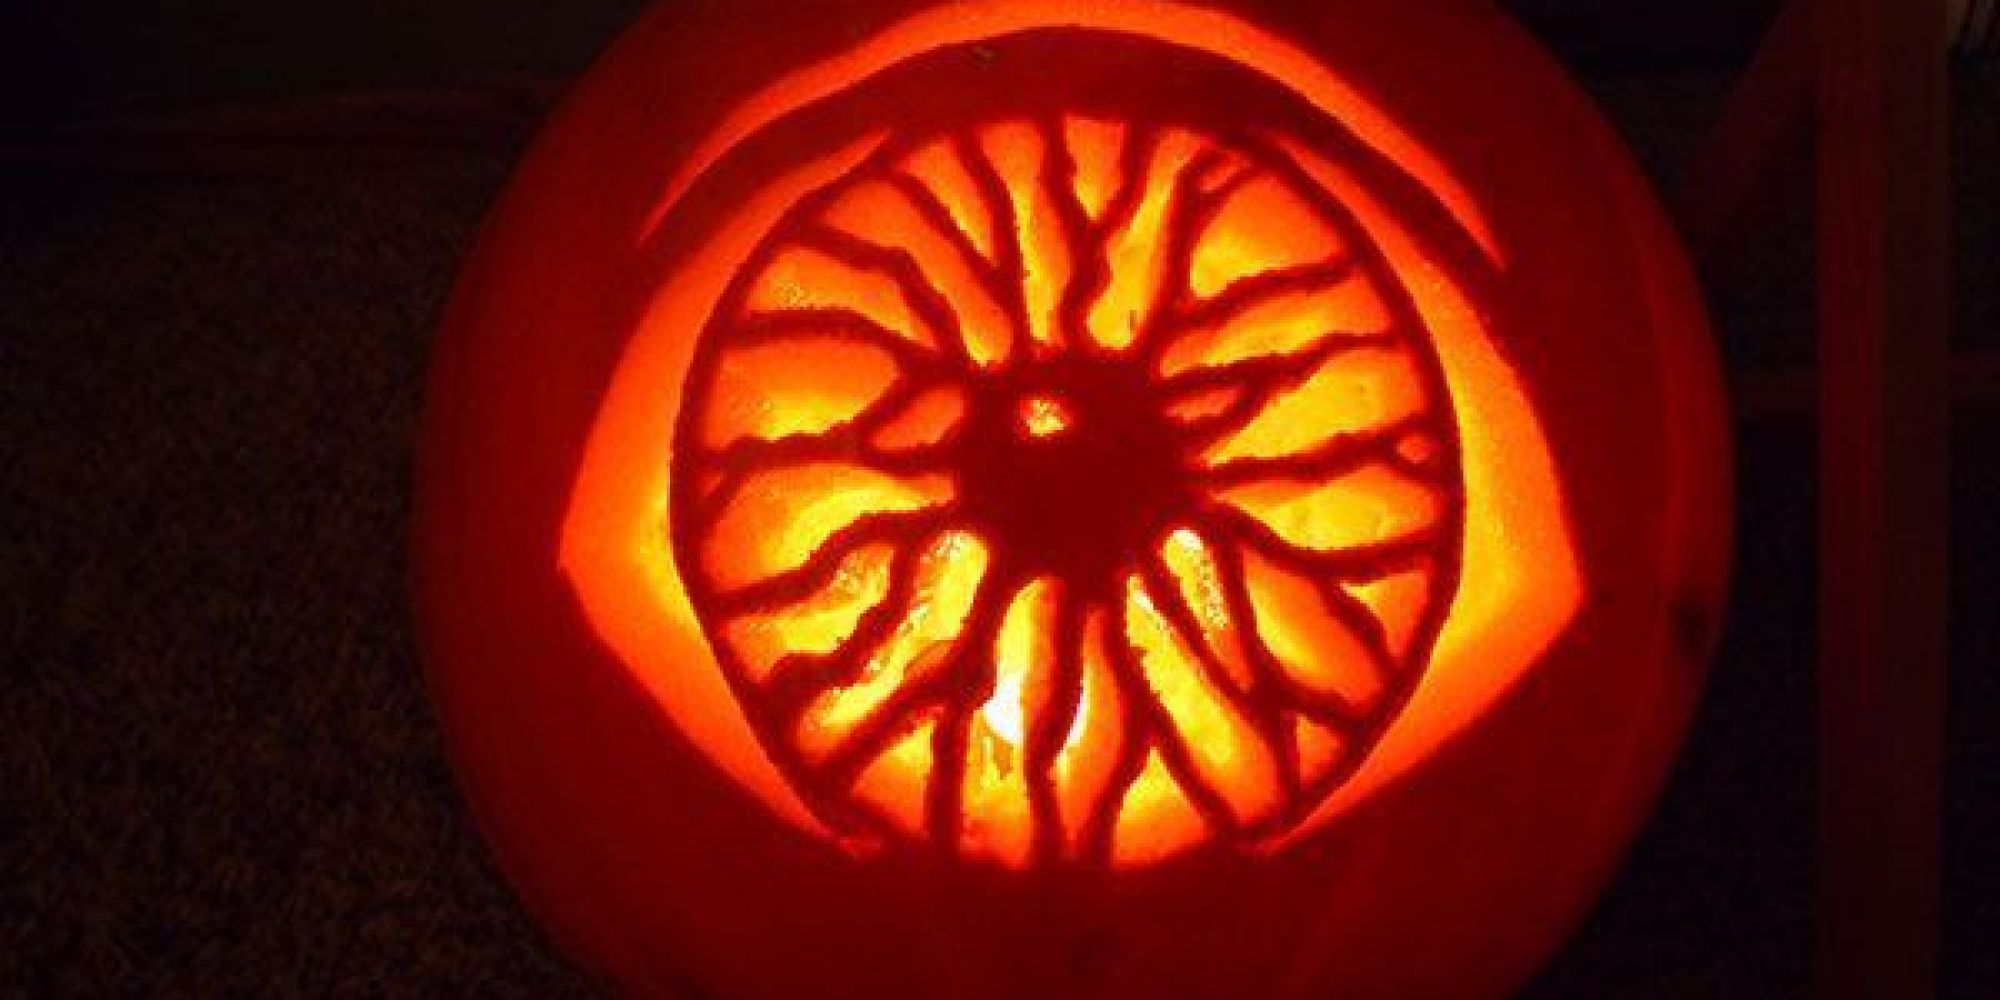 pumpkin-carving-ideas-100-unique-and-simple-jack-o-lanterns